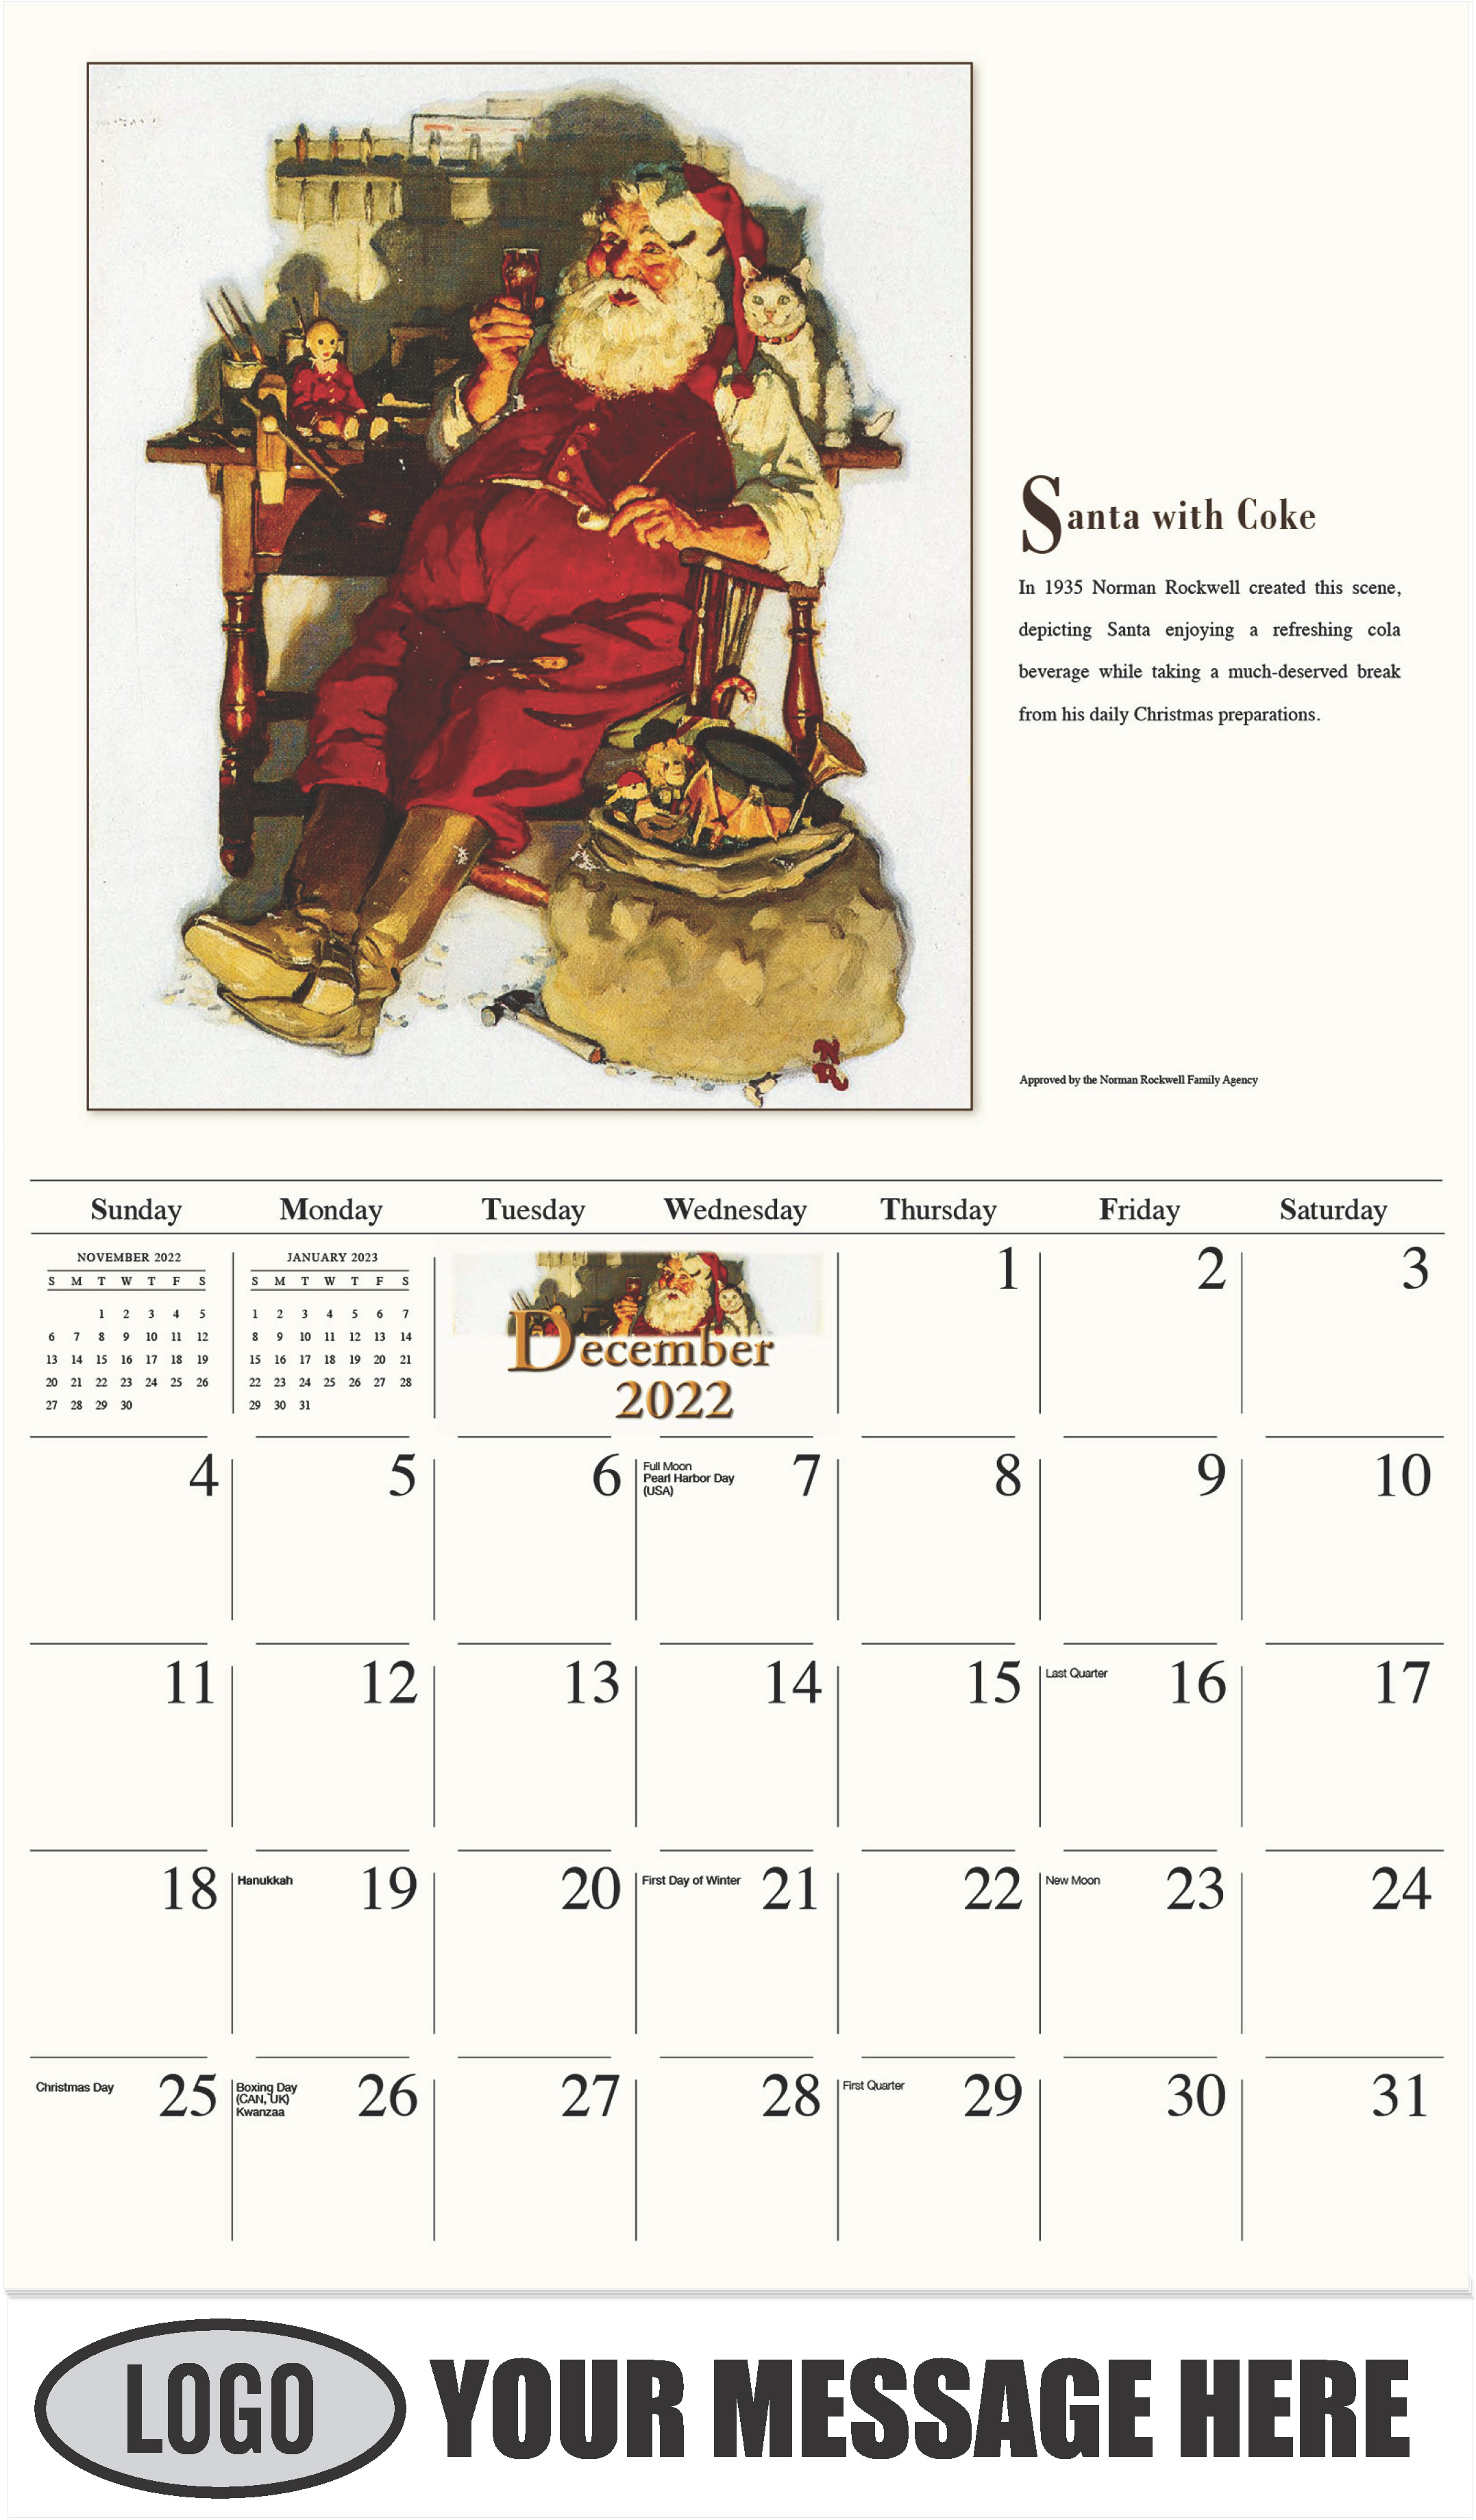 Space Age Santa  - December 2022 - Norman Rockwell - Memorable Images 2023 Promotional Calendar